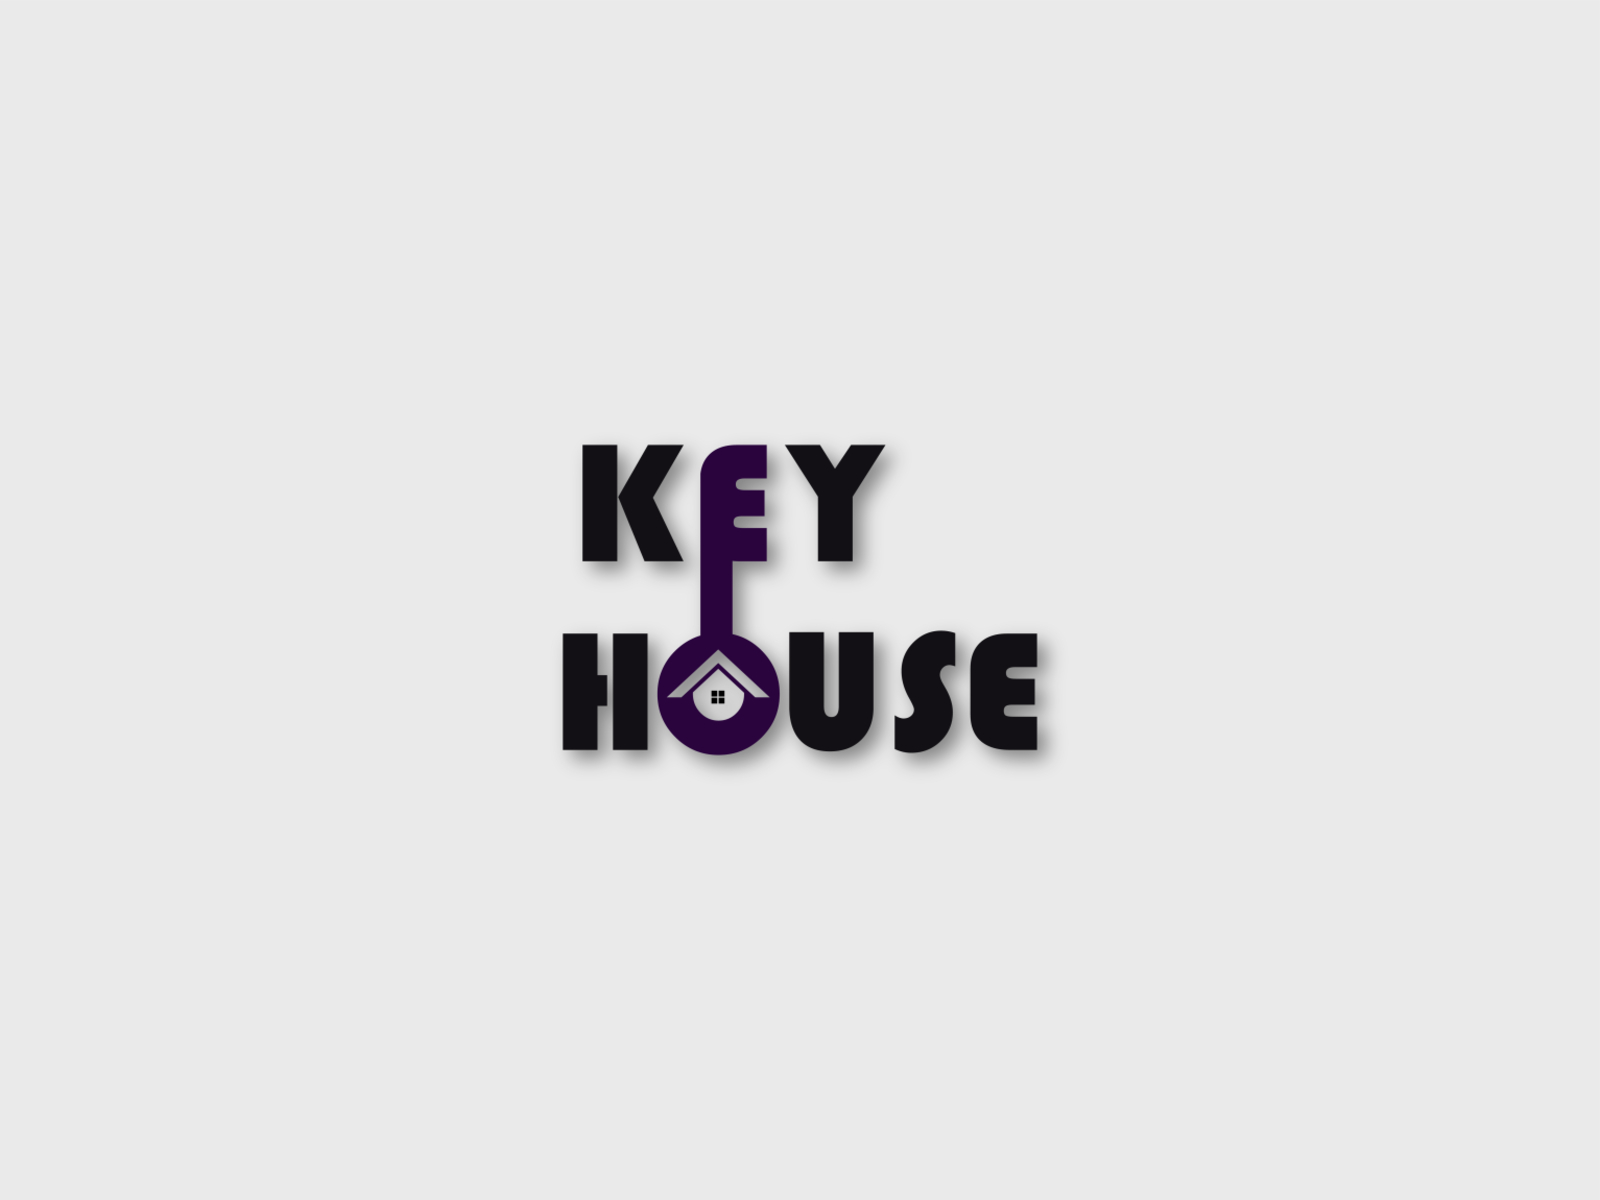 key house by Longing Light on Dribbble